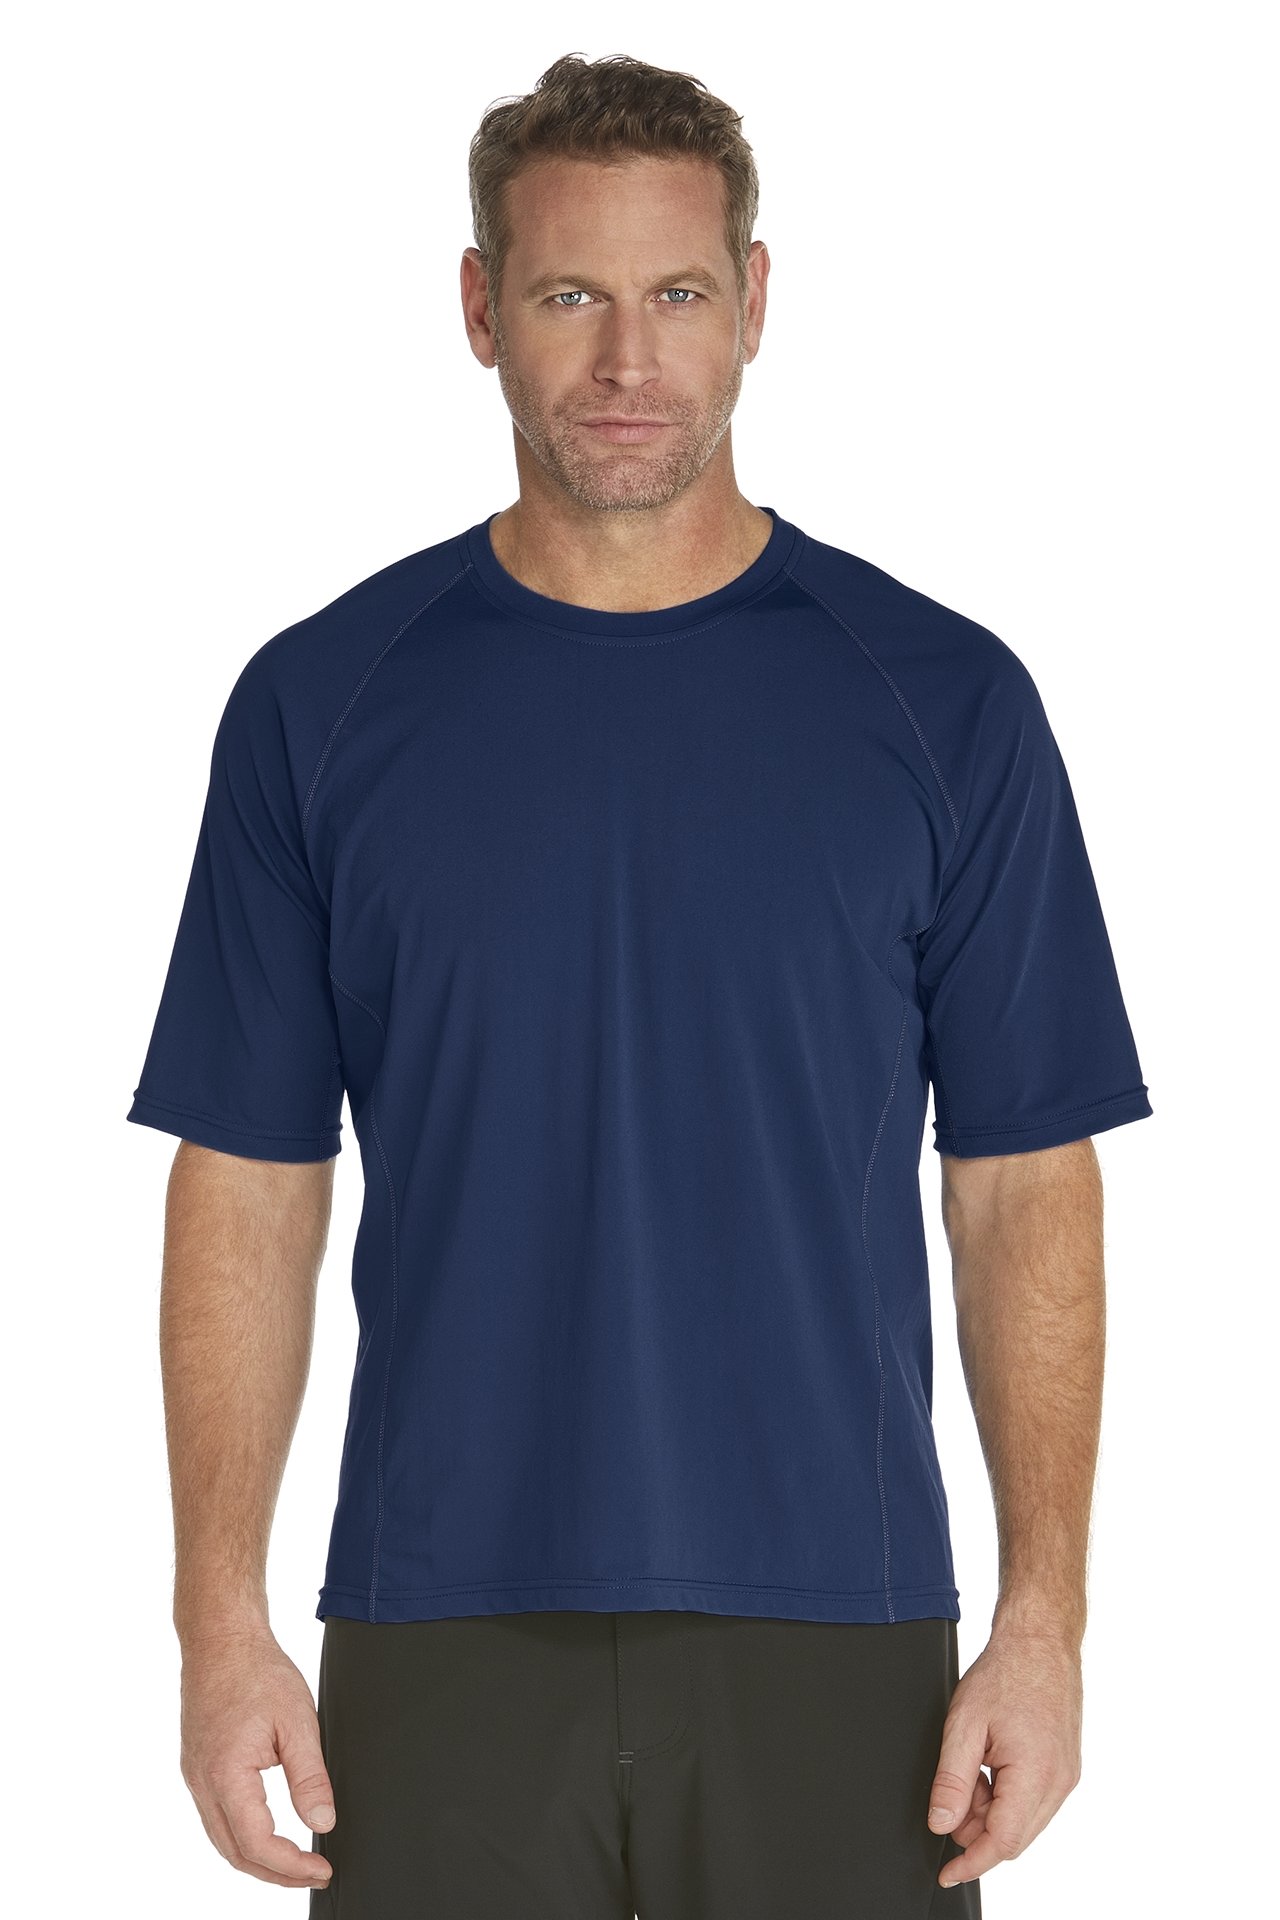 Coolibar - UV Schutz T-Shirt Herren - dunkelblau